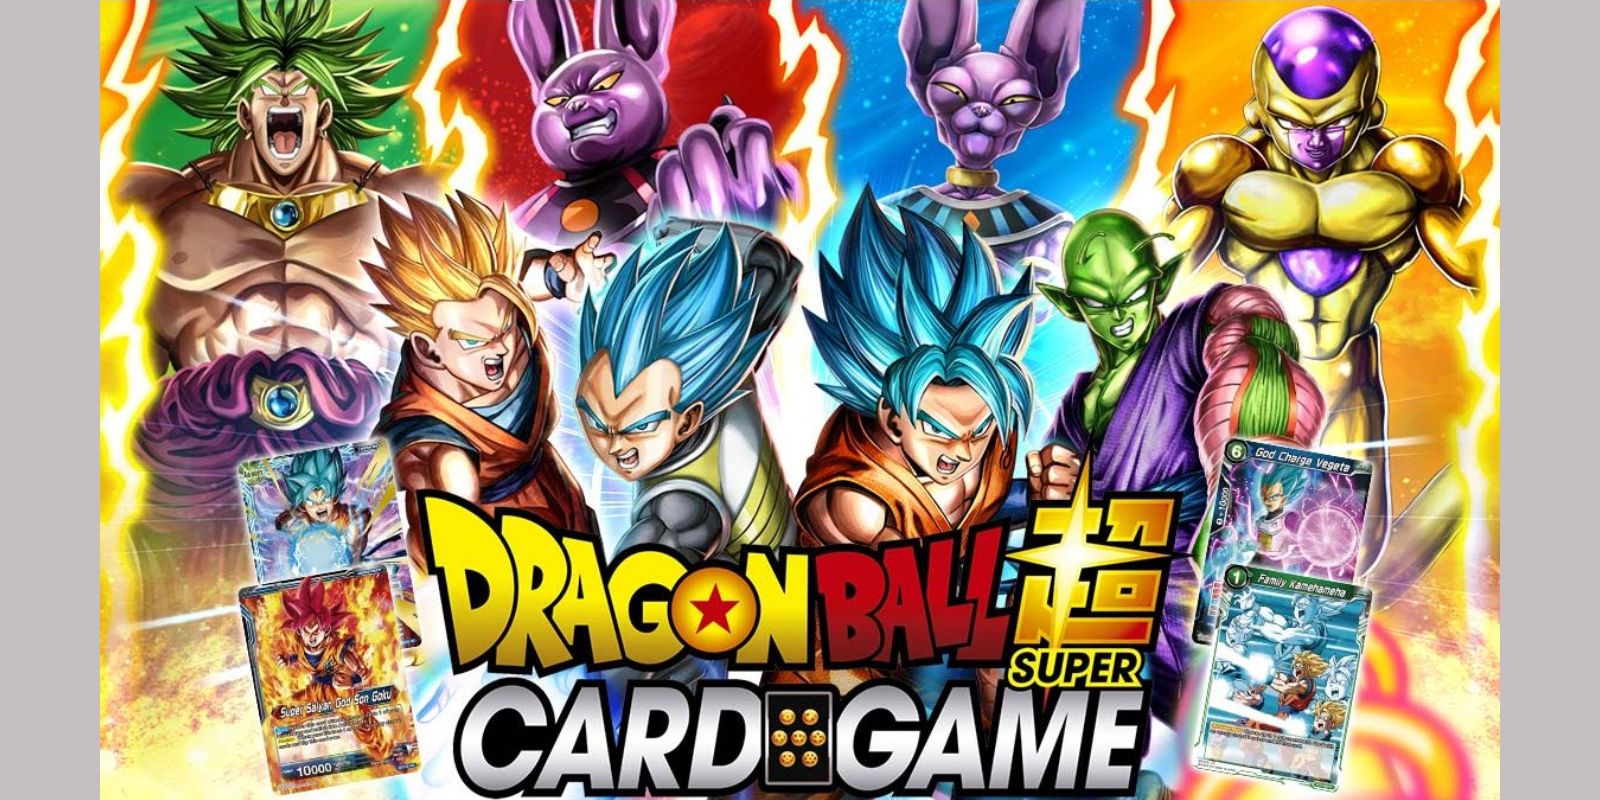 Broly, Gohan, Champa, Vegeta, Goku, Beerus, Piccolo, and Frieza along with Dragon Ball Super Card Game cards